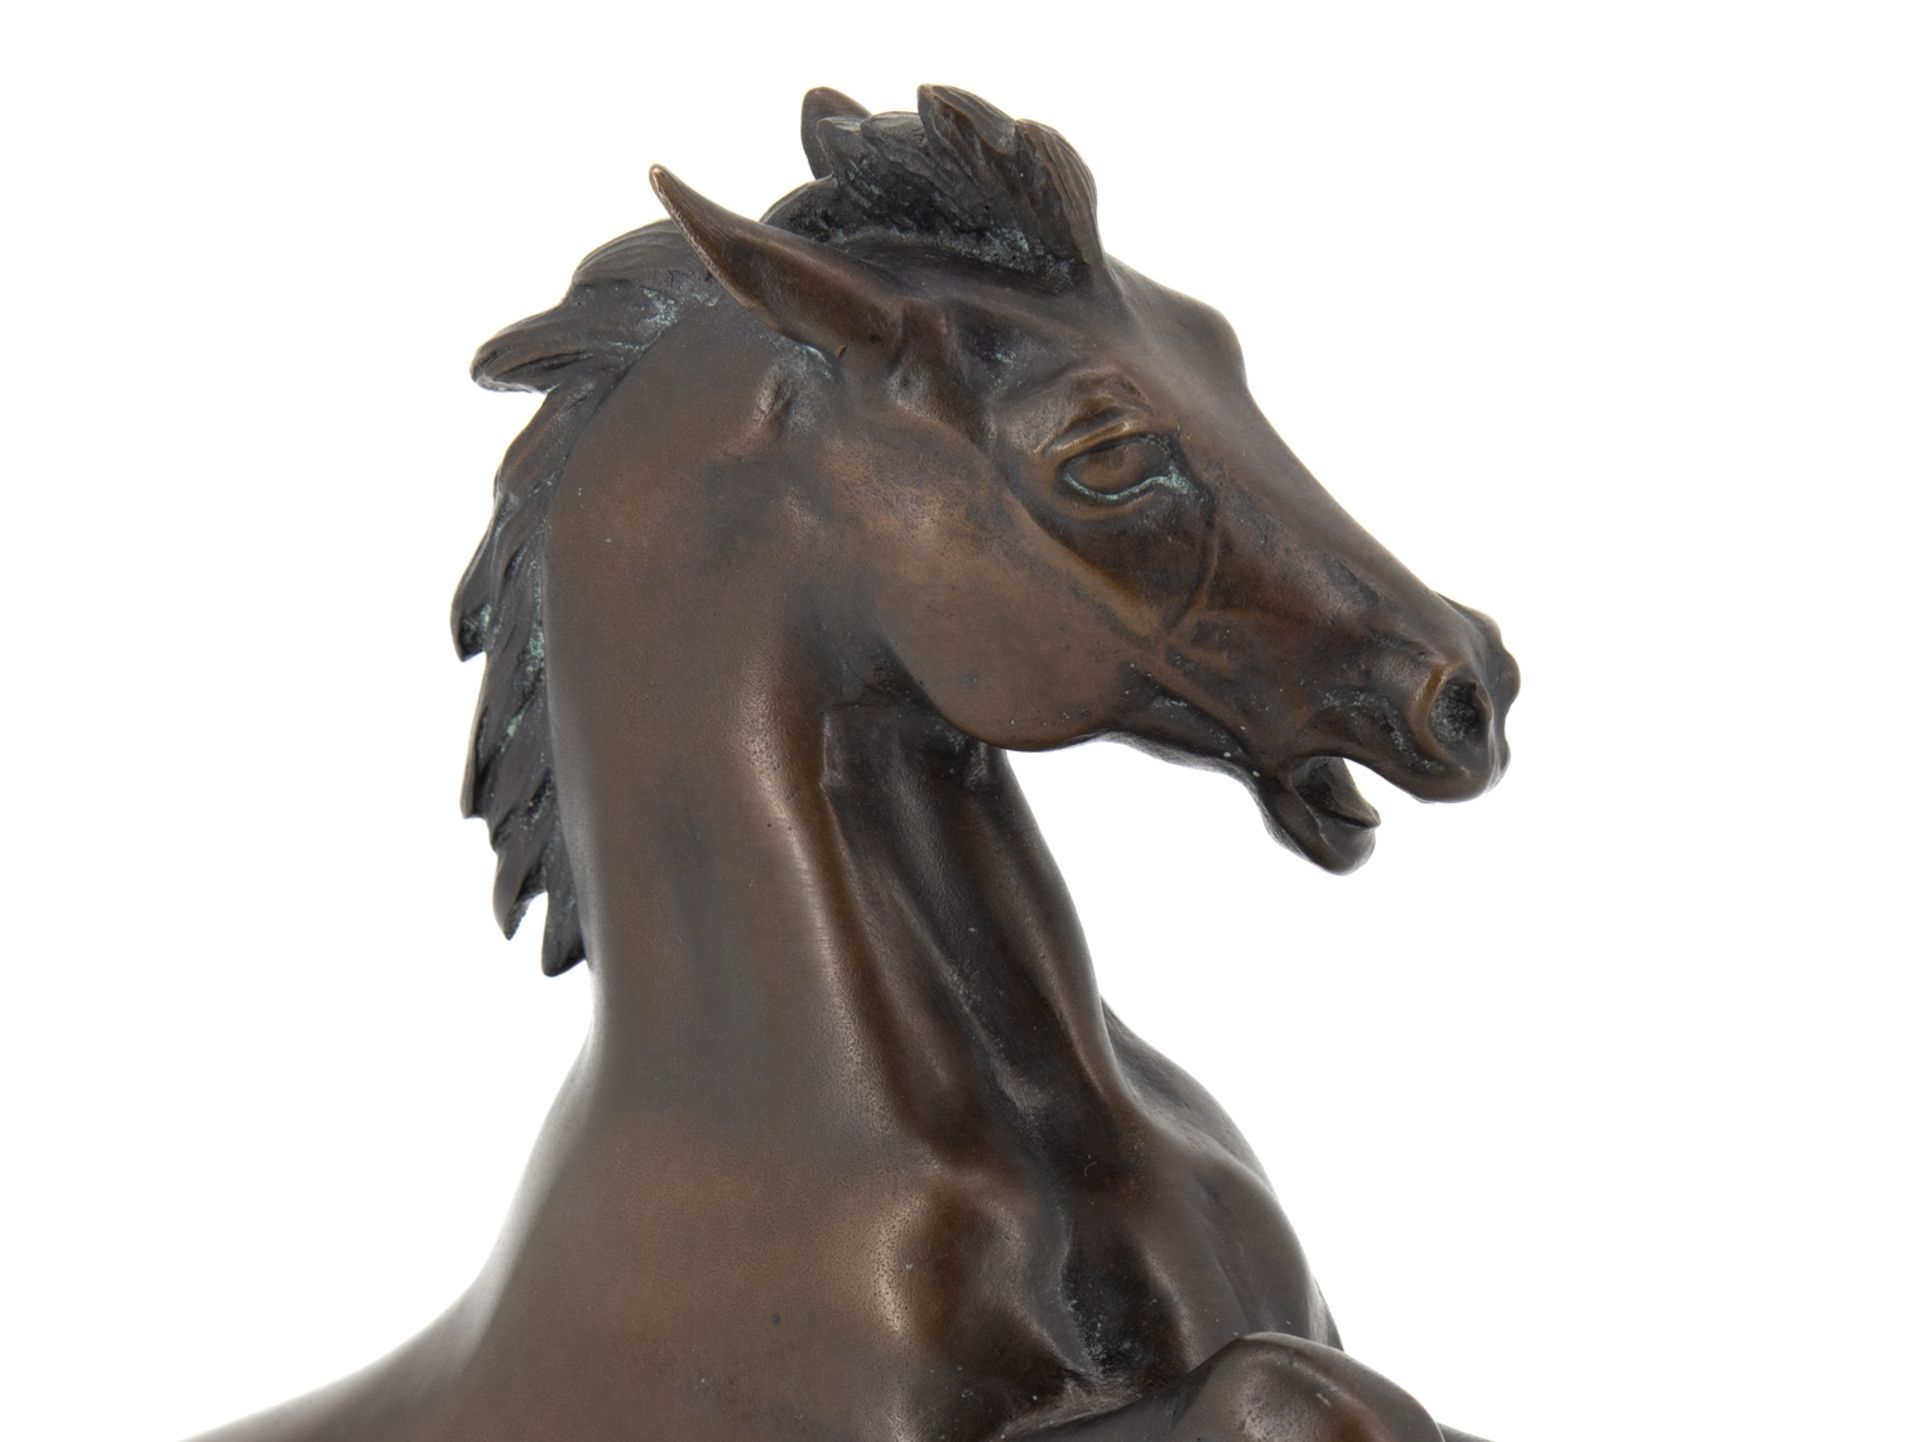 Diller Helmut (1911 - 1984), Bronze sculpture "Steigendes Pferd" (Rising Horse) - Image 6 of 9